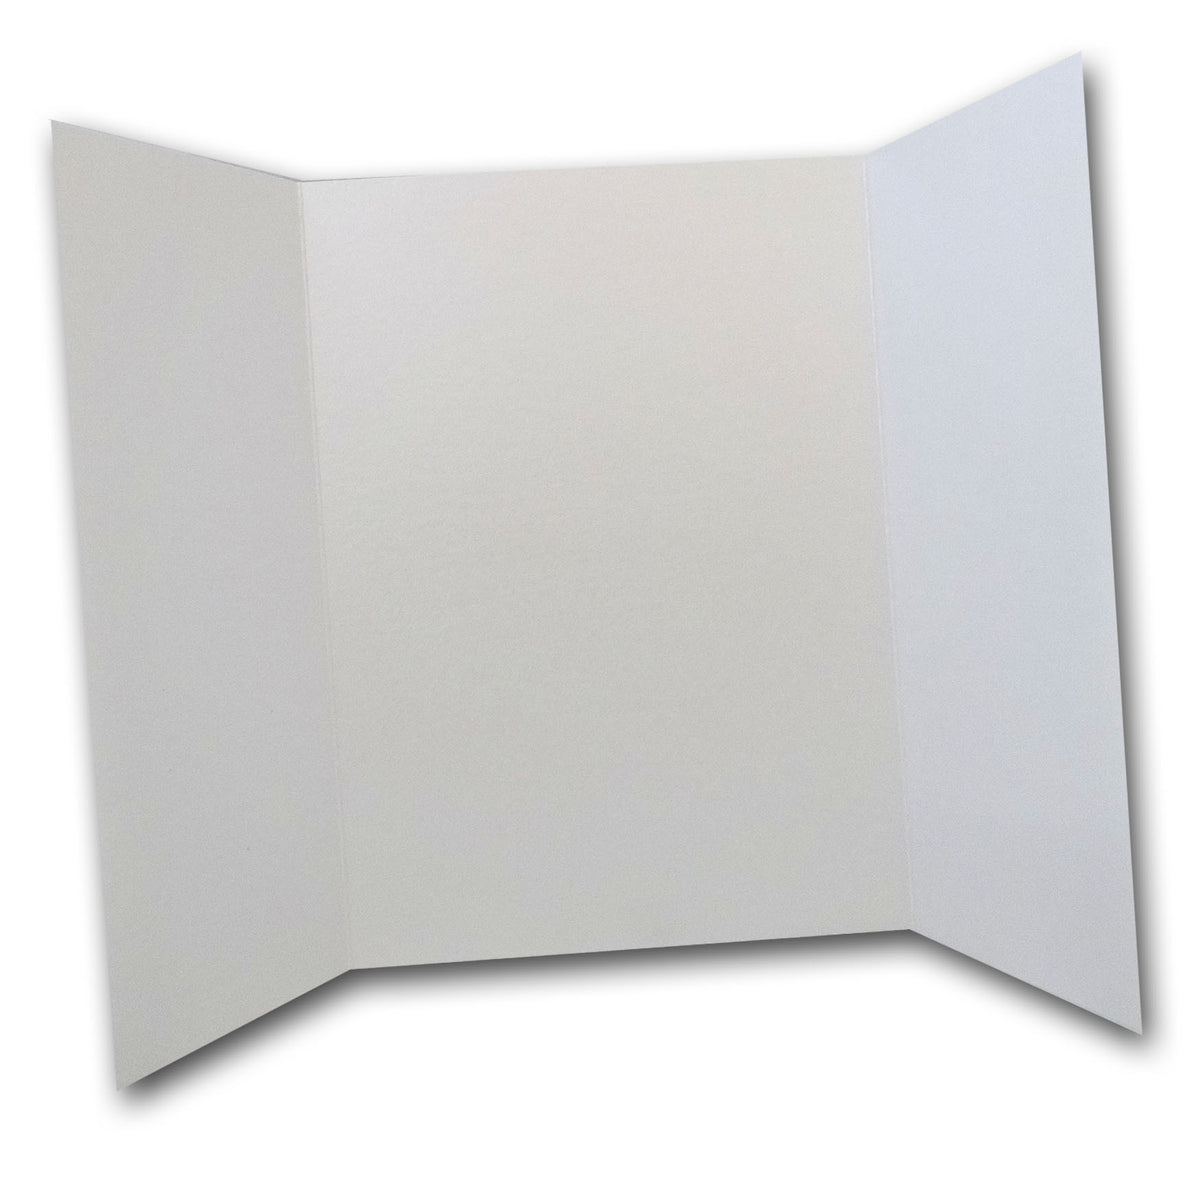 Shimmery White 5x7 Gatefold Discount Card Stock DIY Invitations